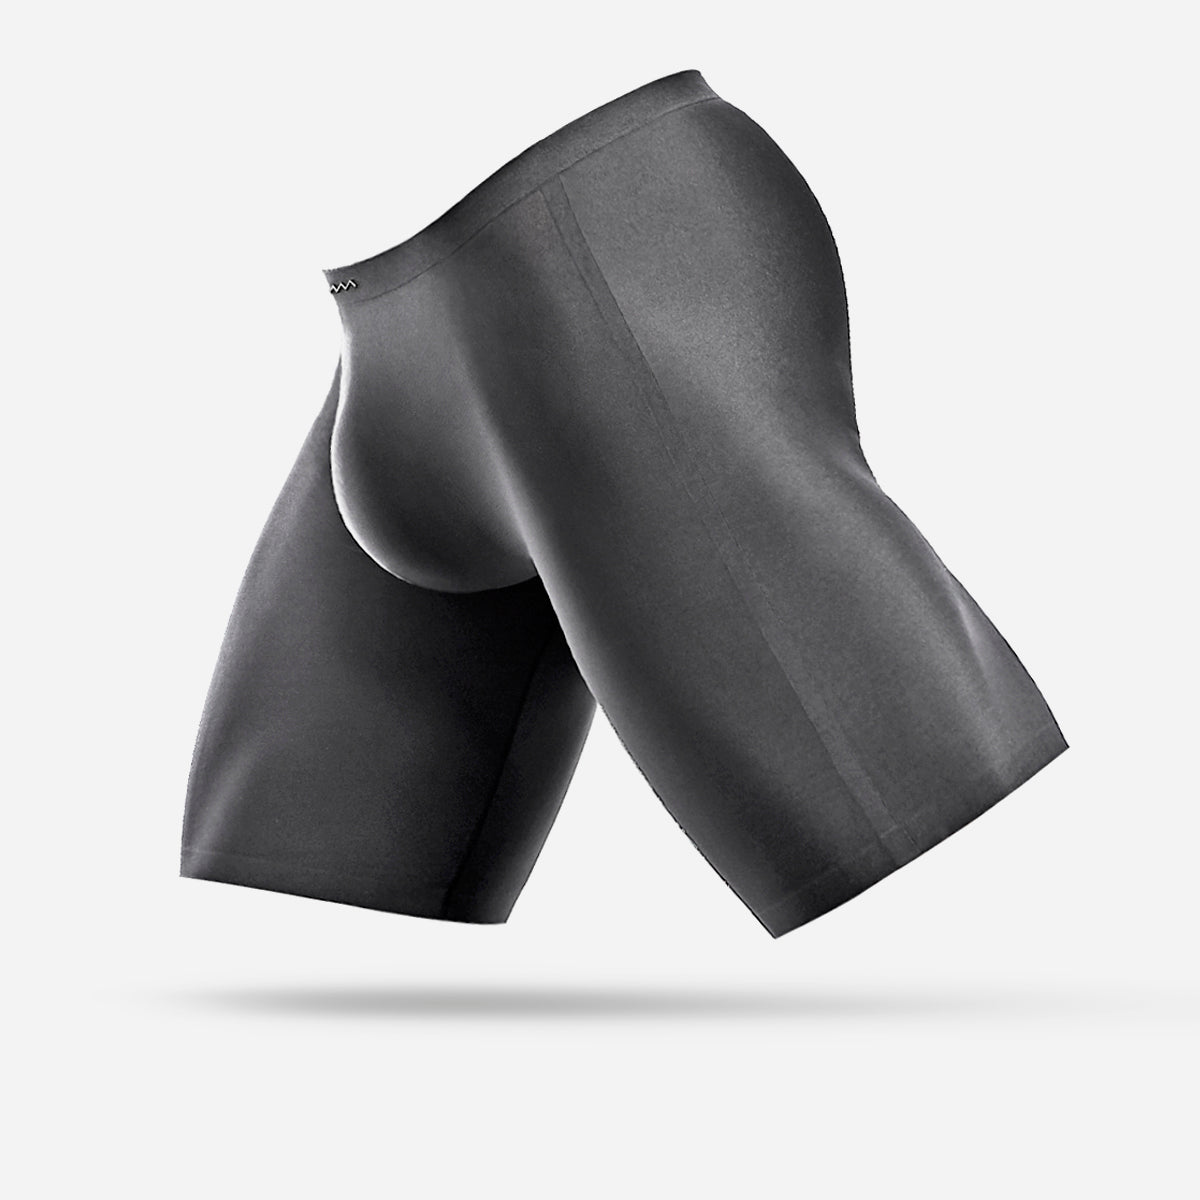 AsWeMove Men's underwear Dominate Boxer Briefs Black Medium 4 Pack